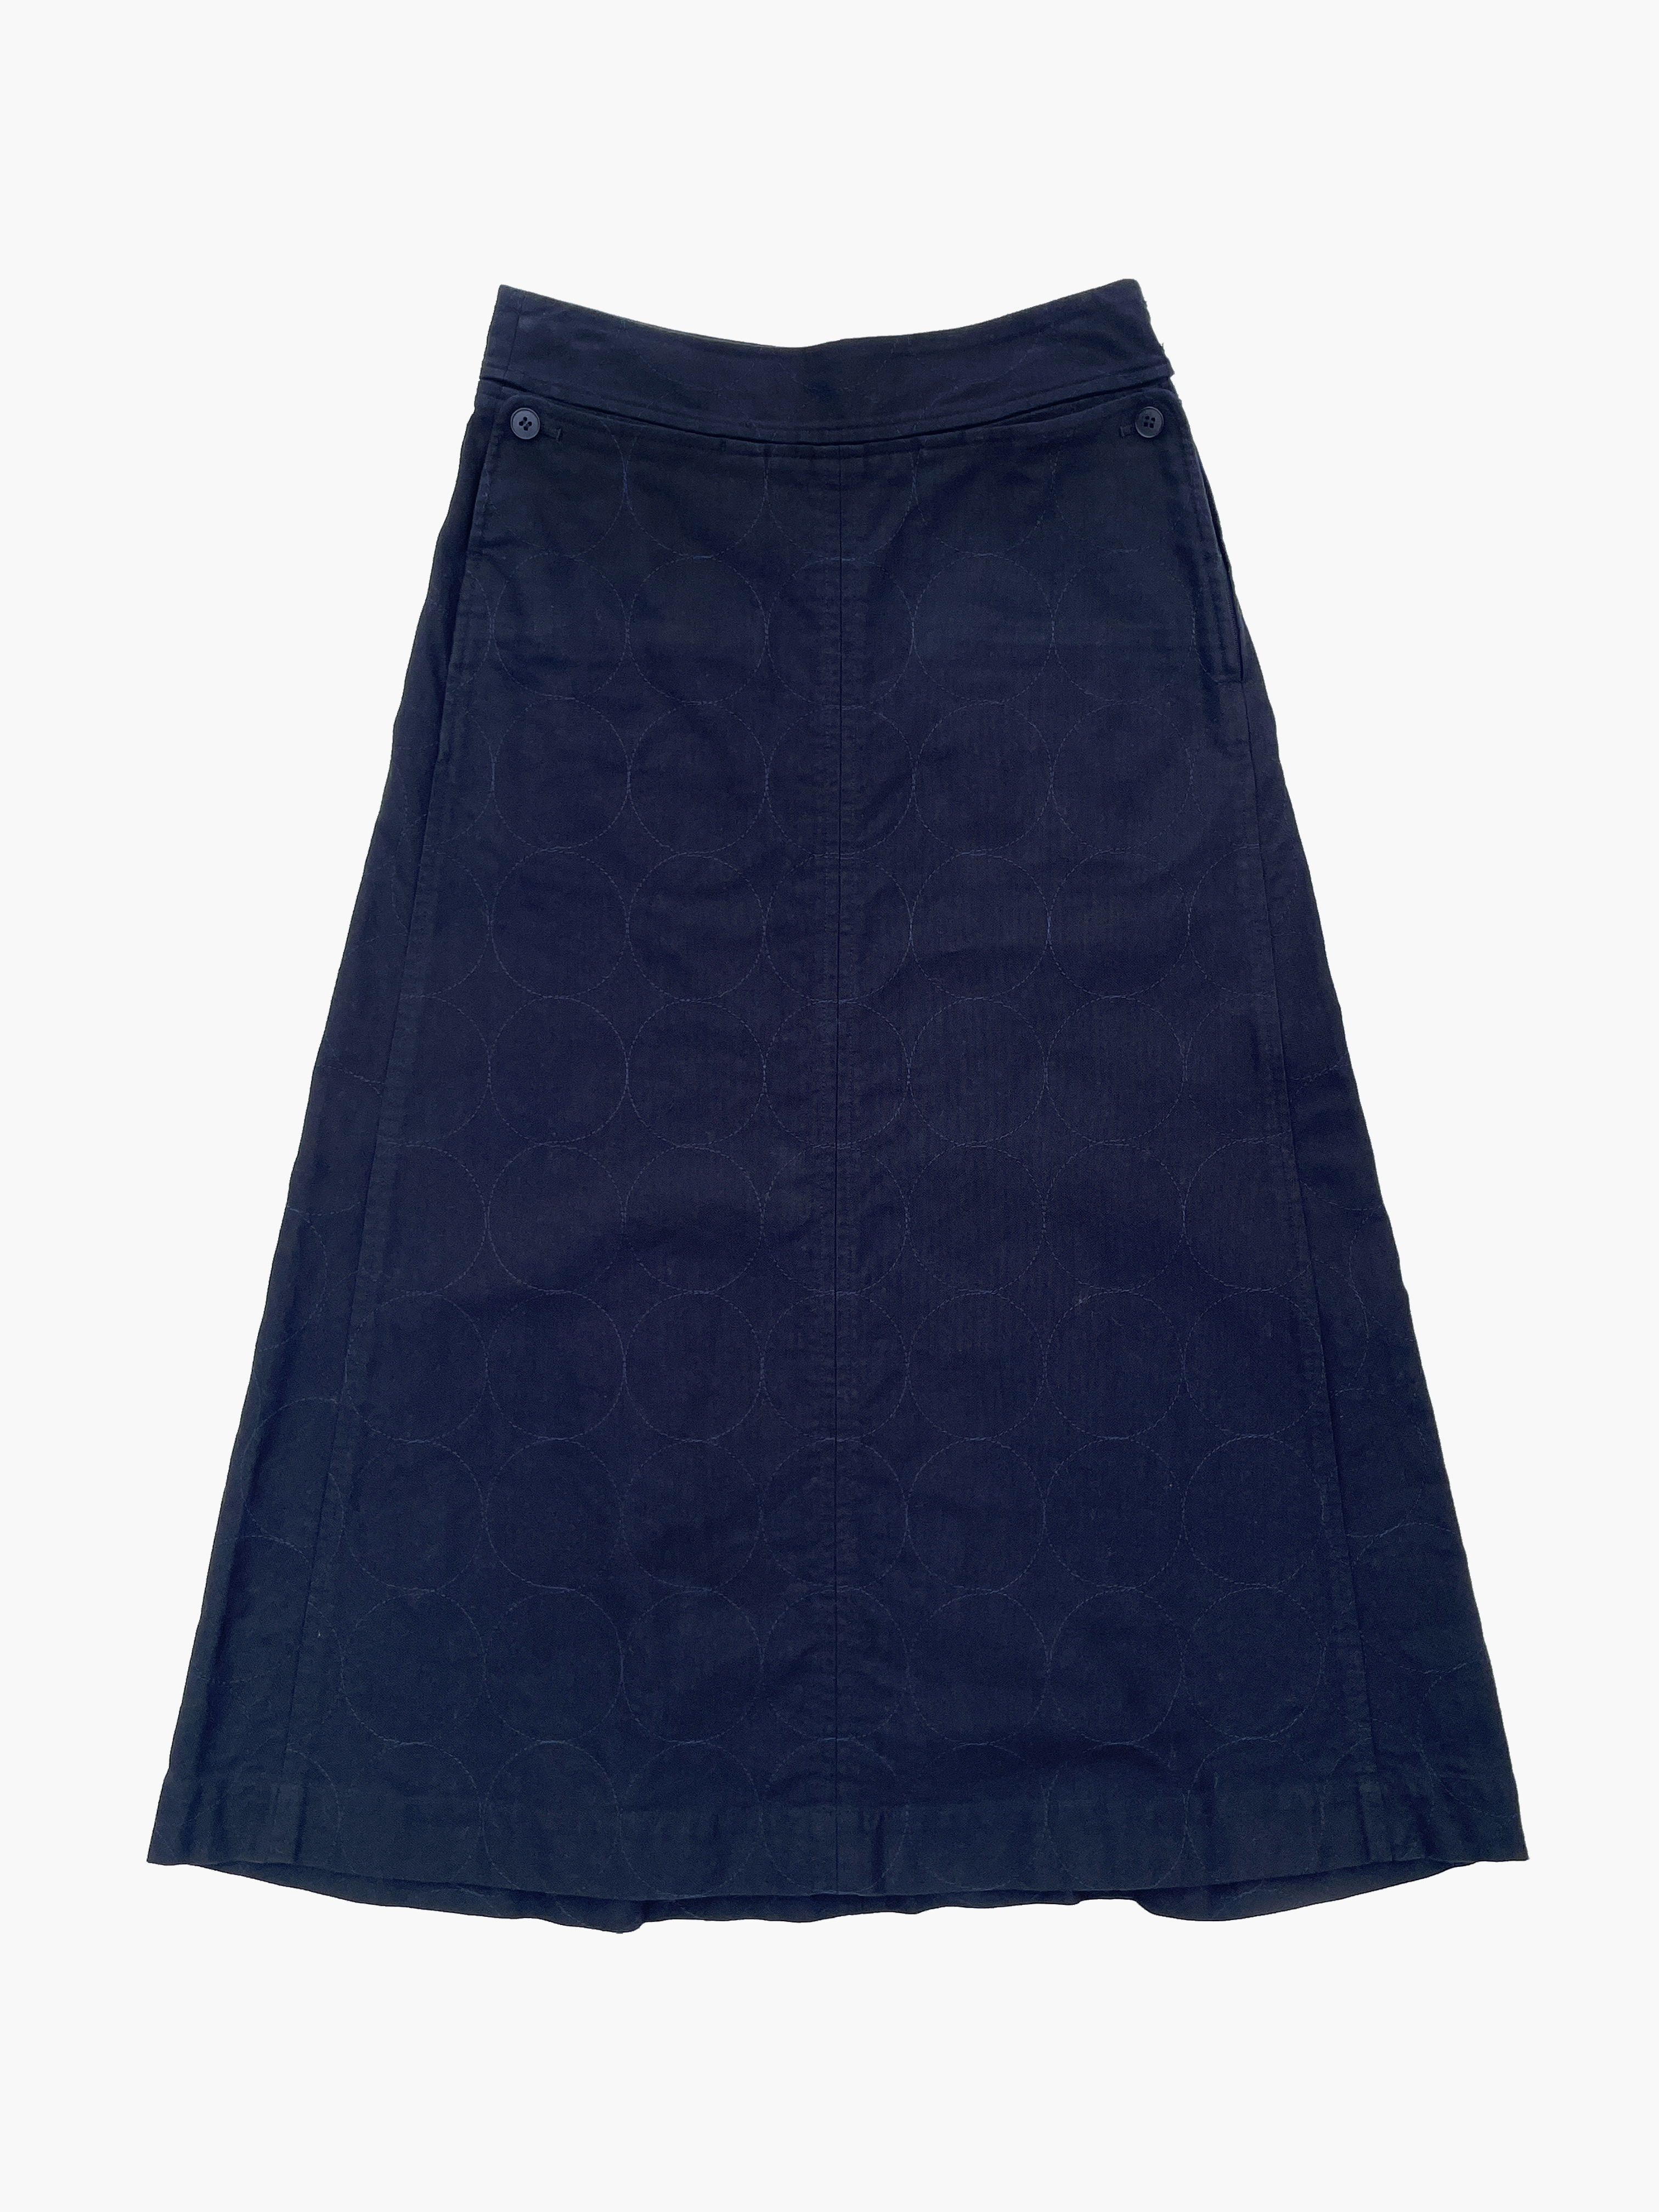 ISSEY MIYAKERound stitch skirt